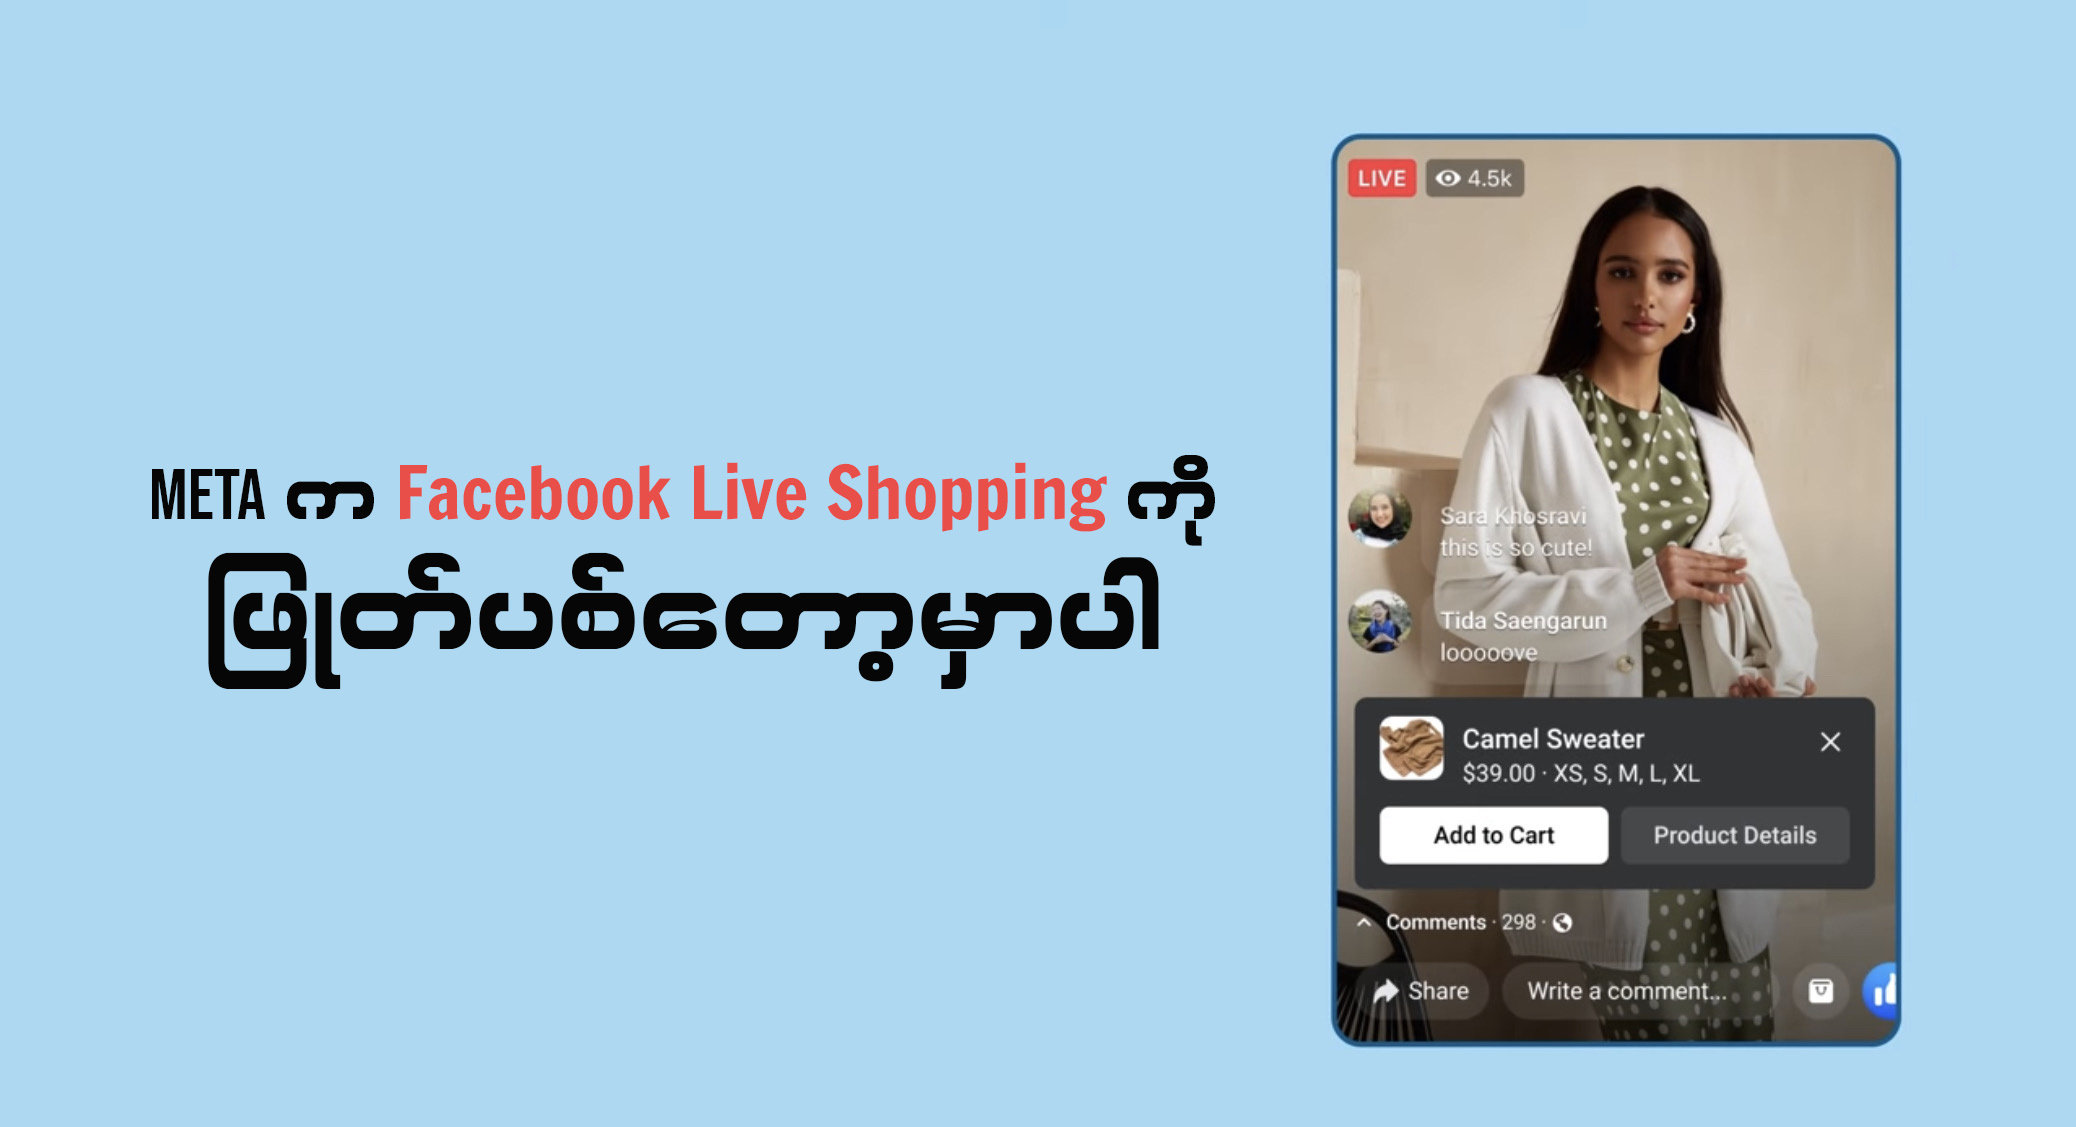 Meta က Facebook Live Shopping ကို ဖြုတ်ပစ်တော့မှာပါ